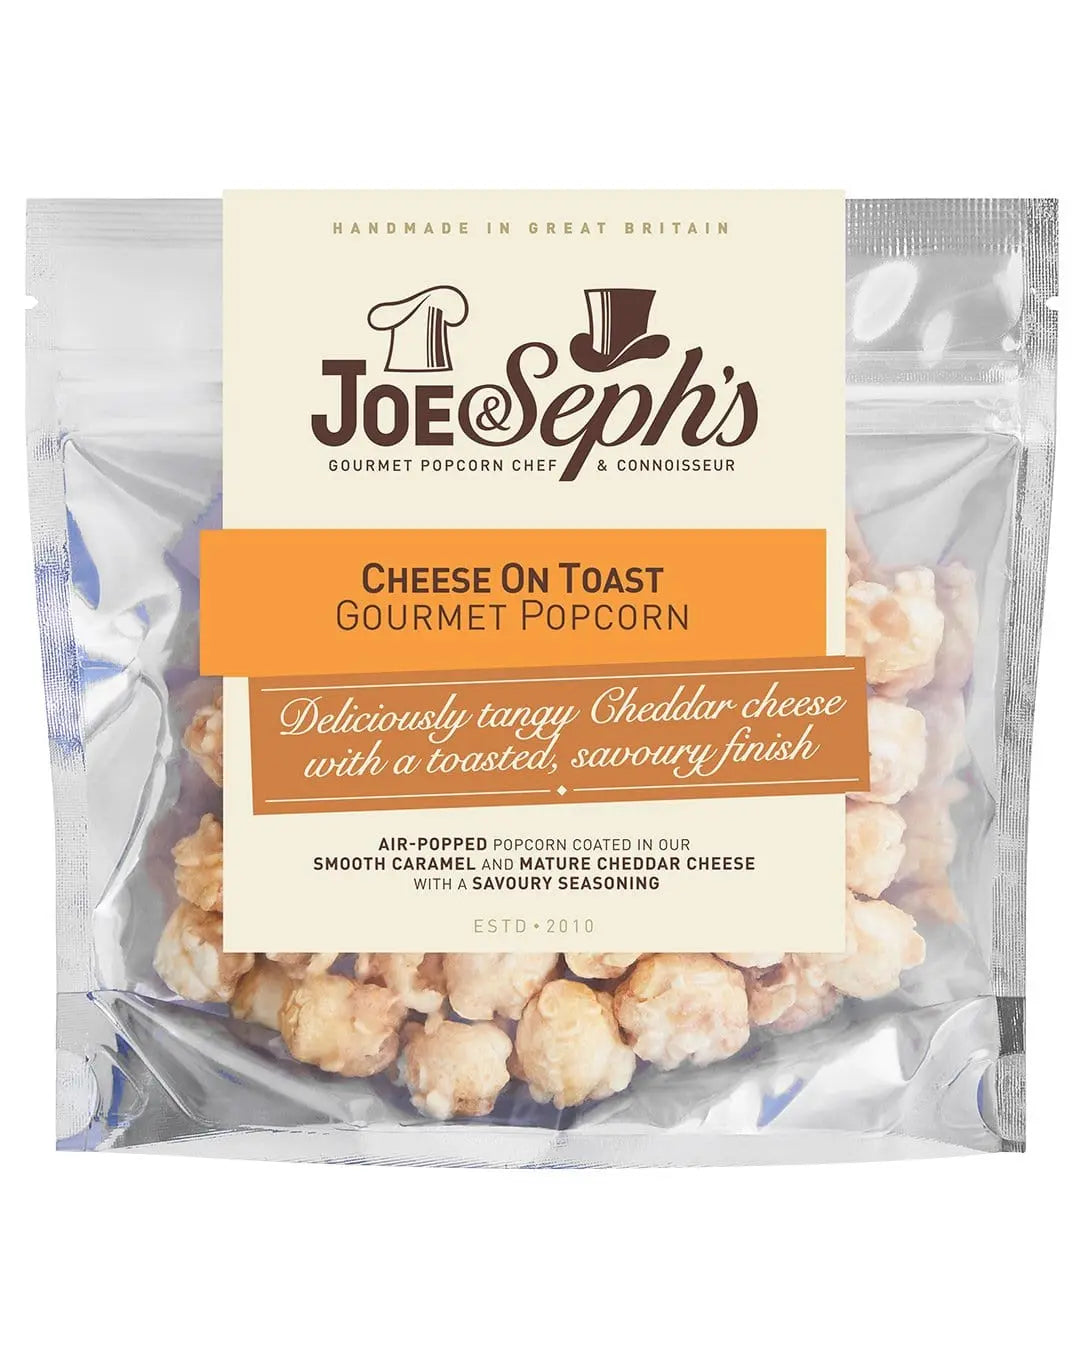 Joe & Seph's Cheese On Toast Popcorn Pouch, 32 g Popcorn 0708022174920